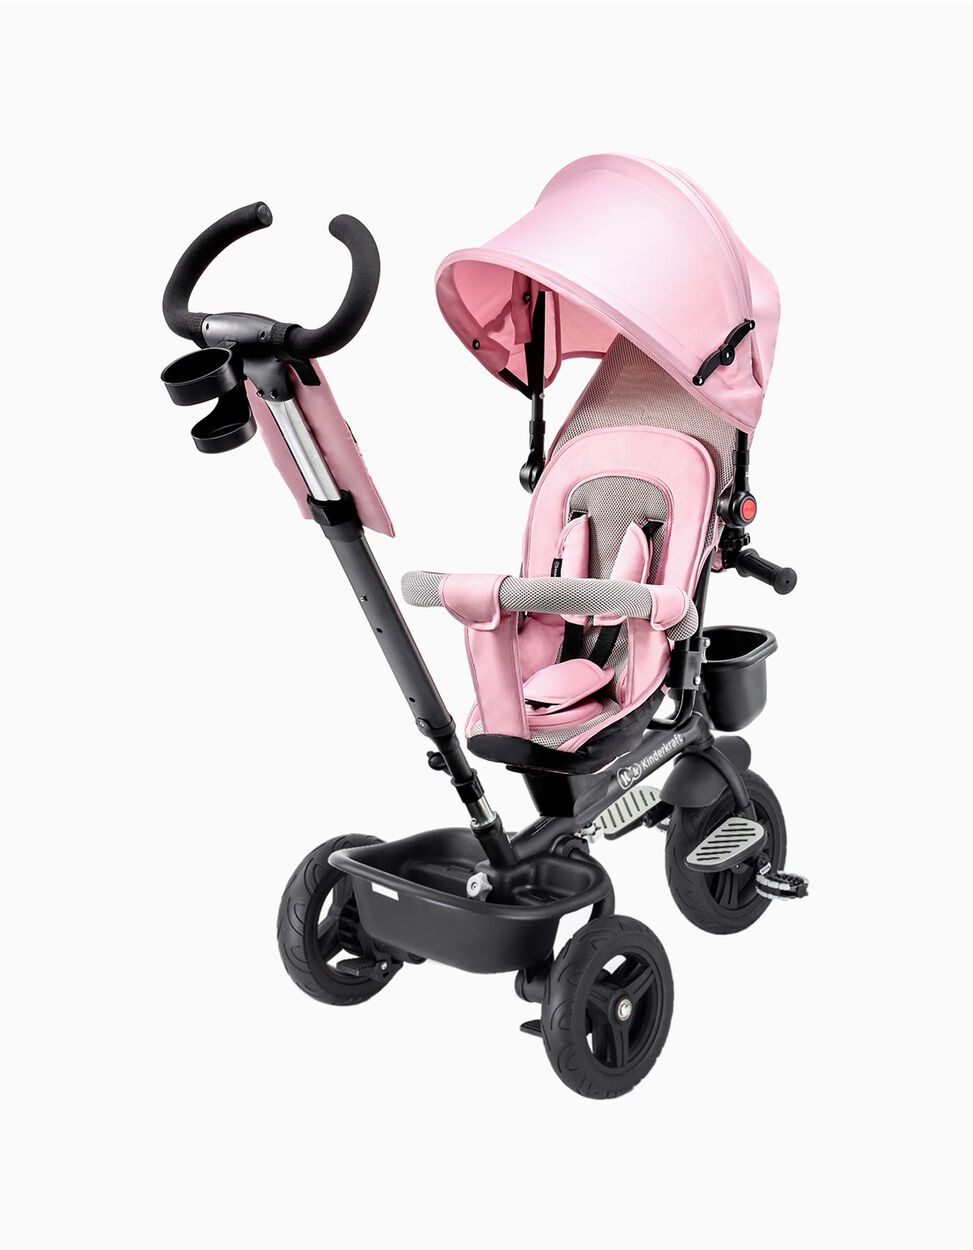 Aveo Tricycle by Kinderkraft, Pink